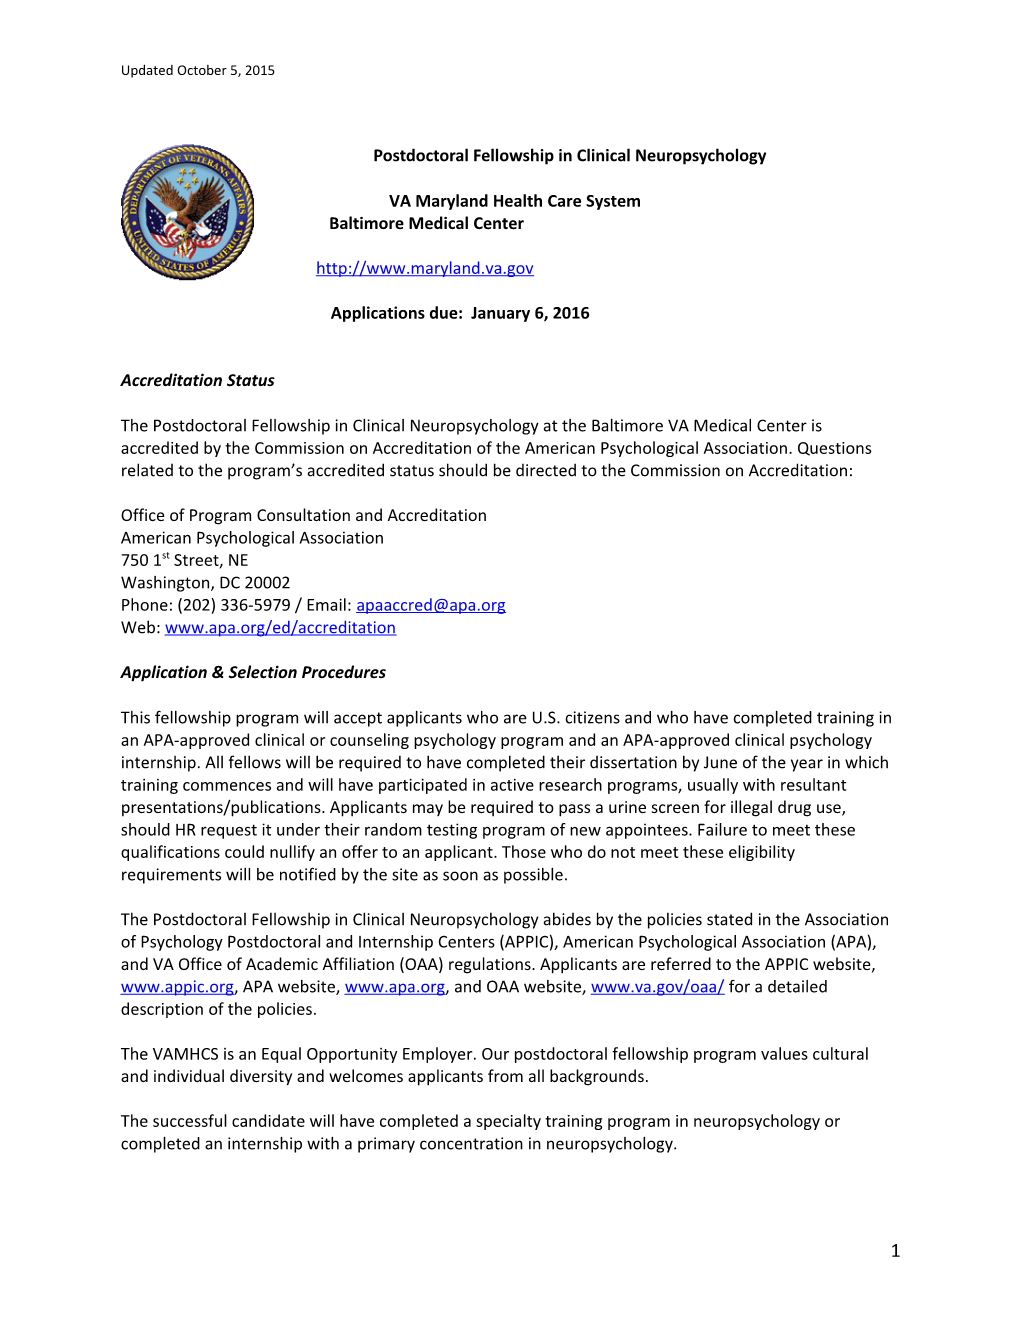 Baltimore VA Medical Center Psychology Fellowship - VA - U.S. Department of Veterans Affairs